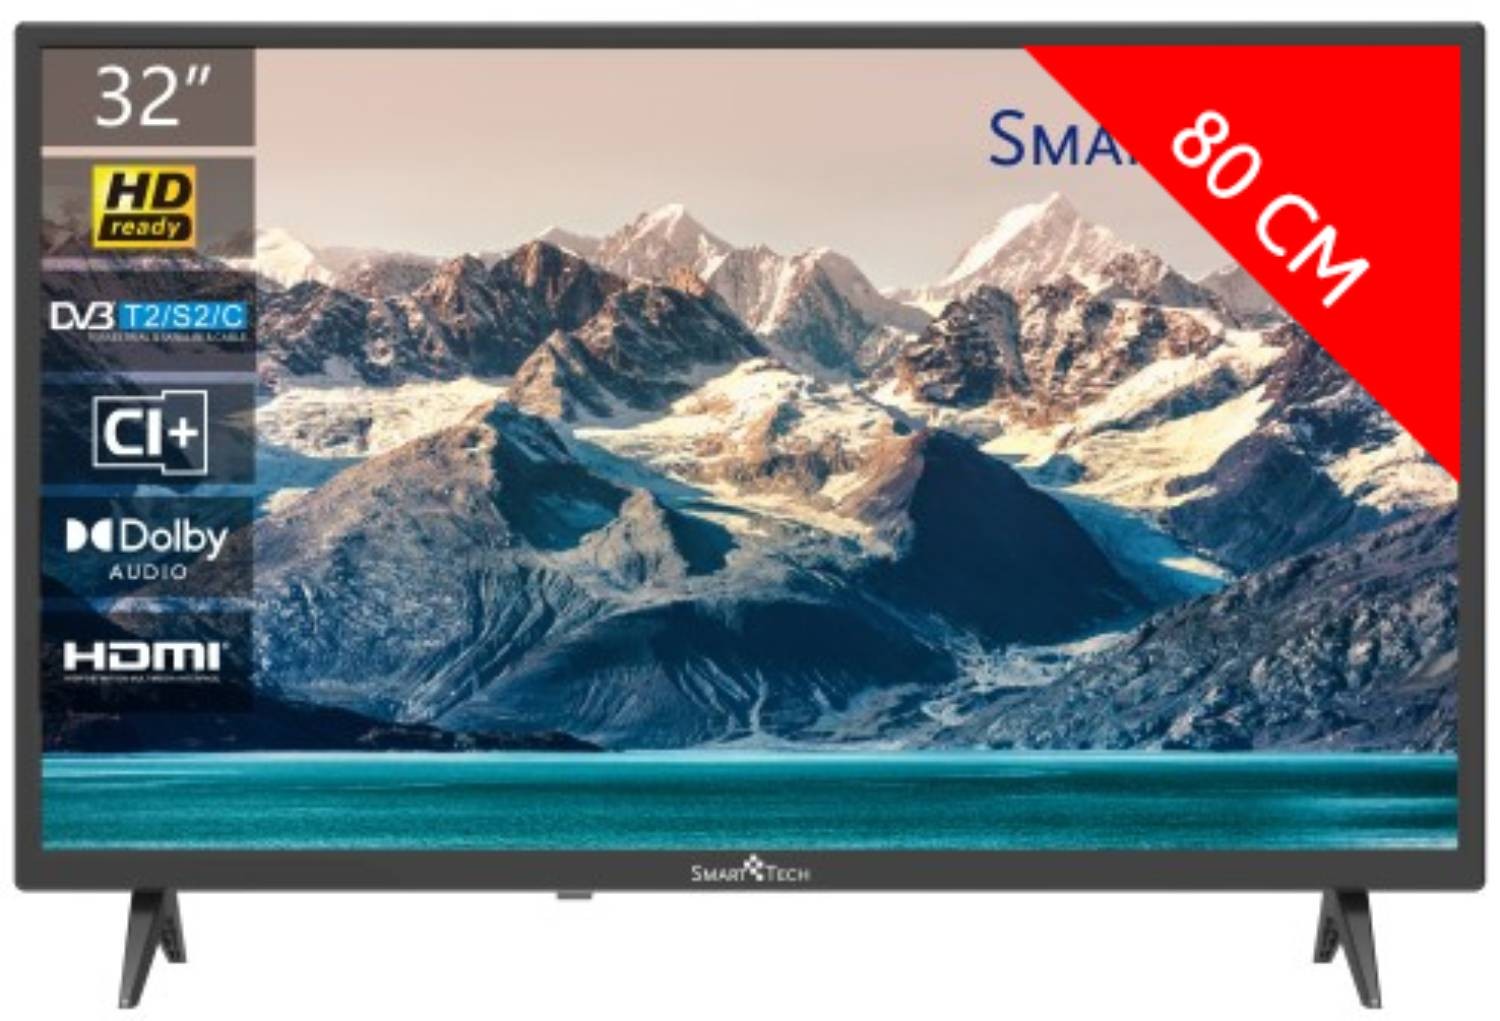 SMART TECH TV LCD 80 cm   32HN10T2